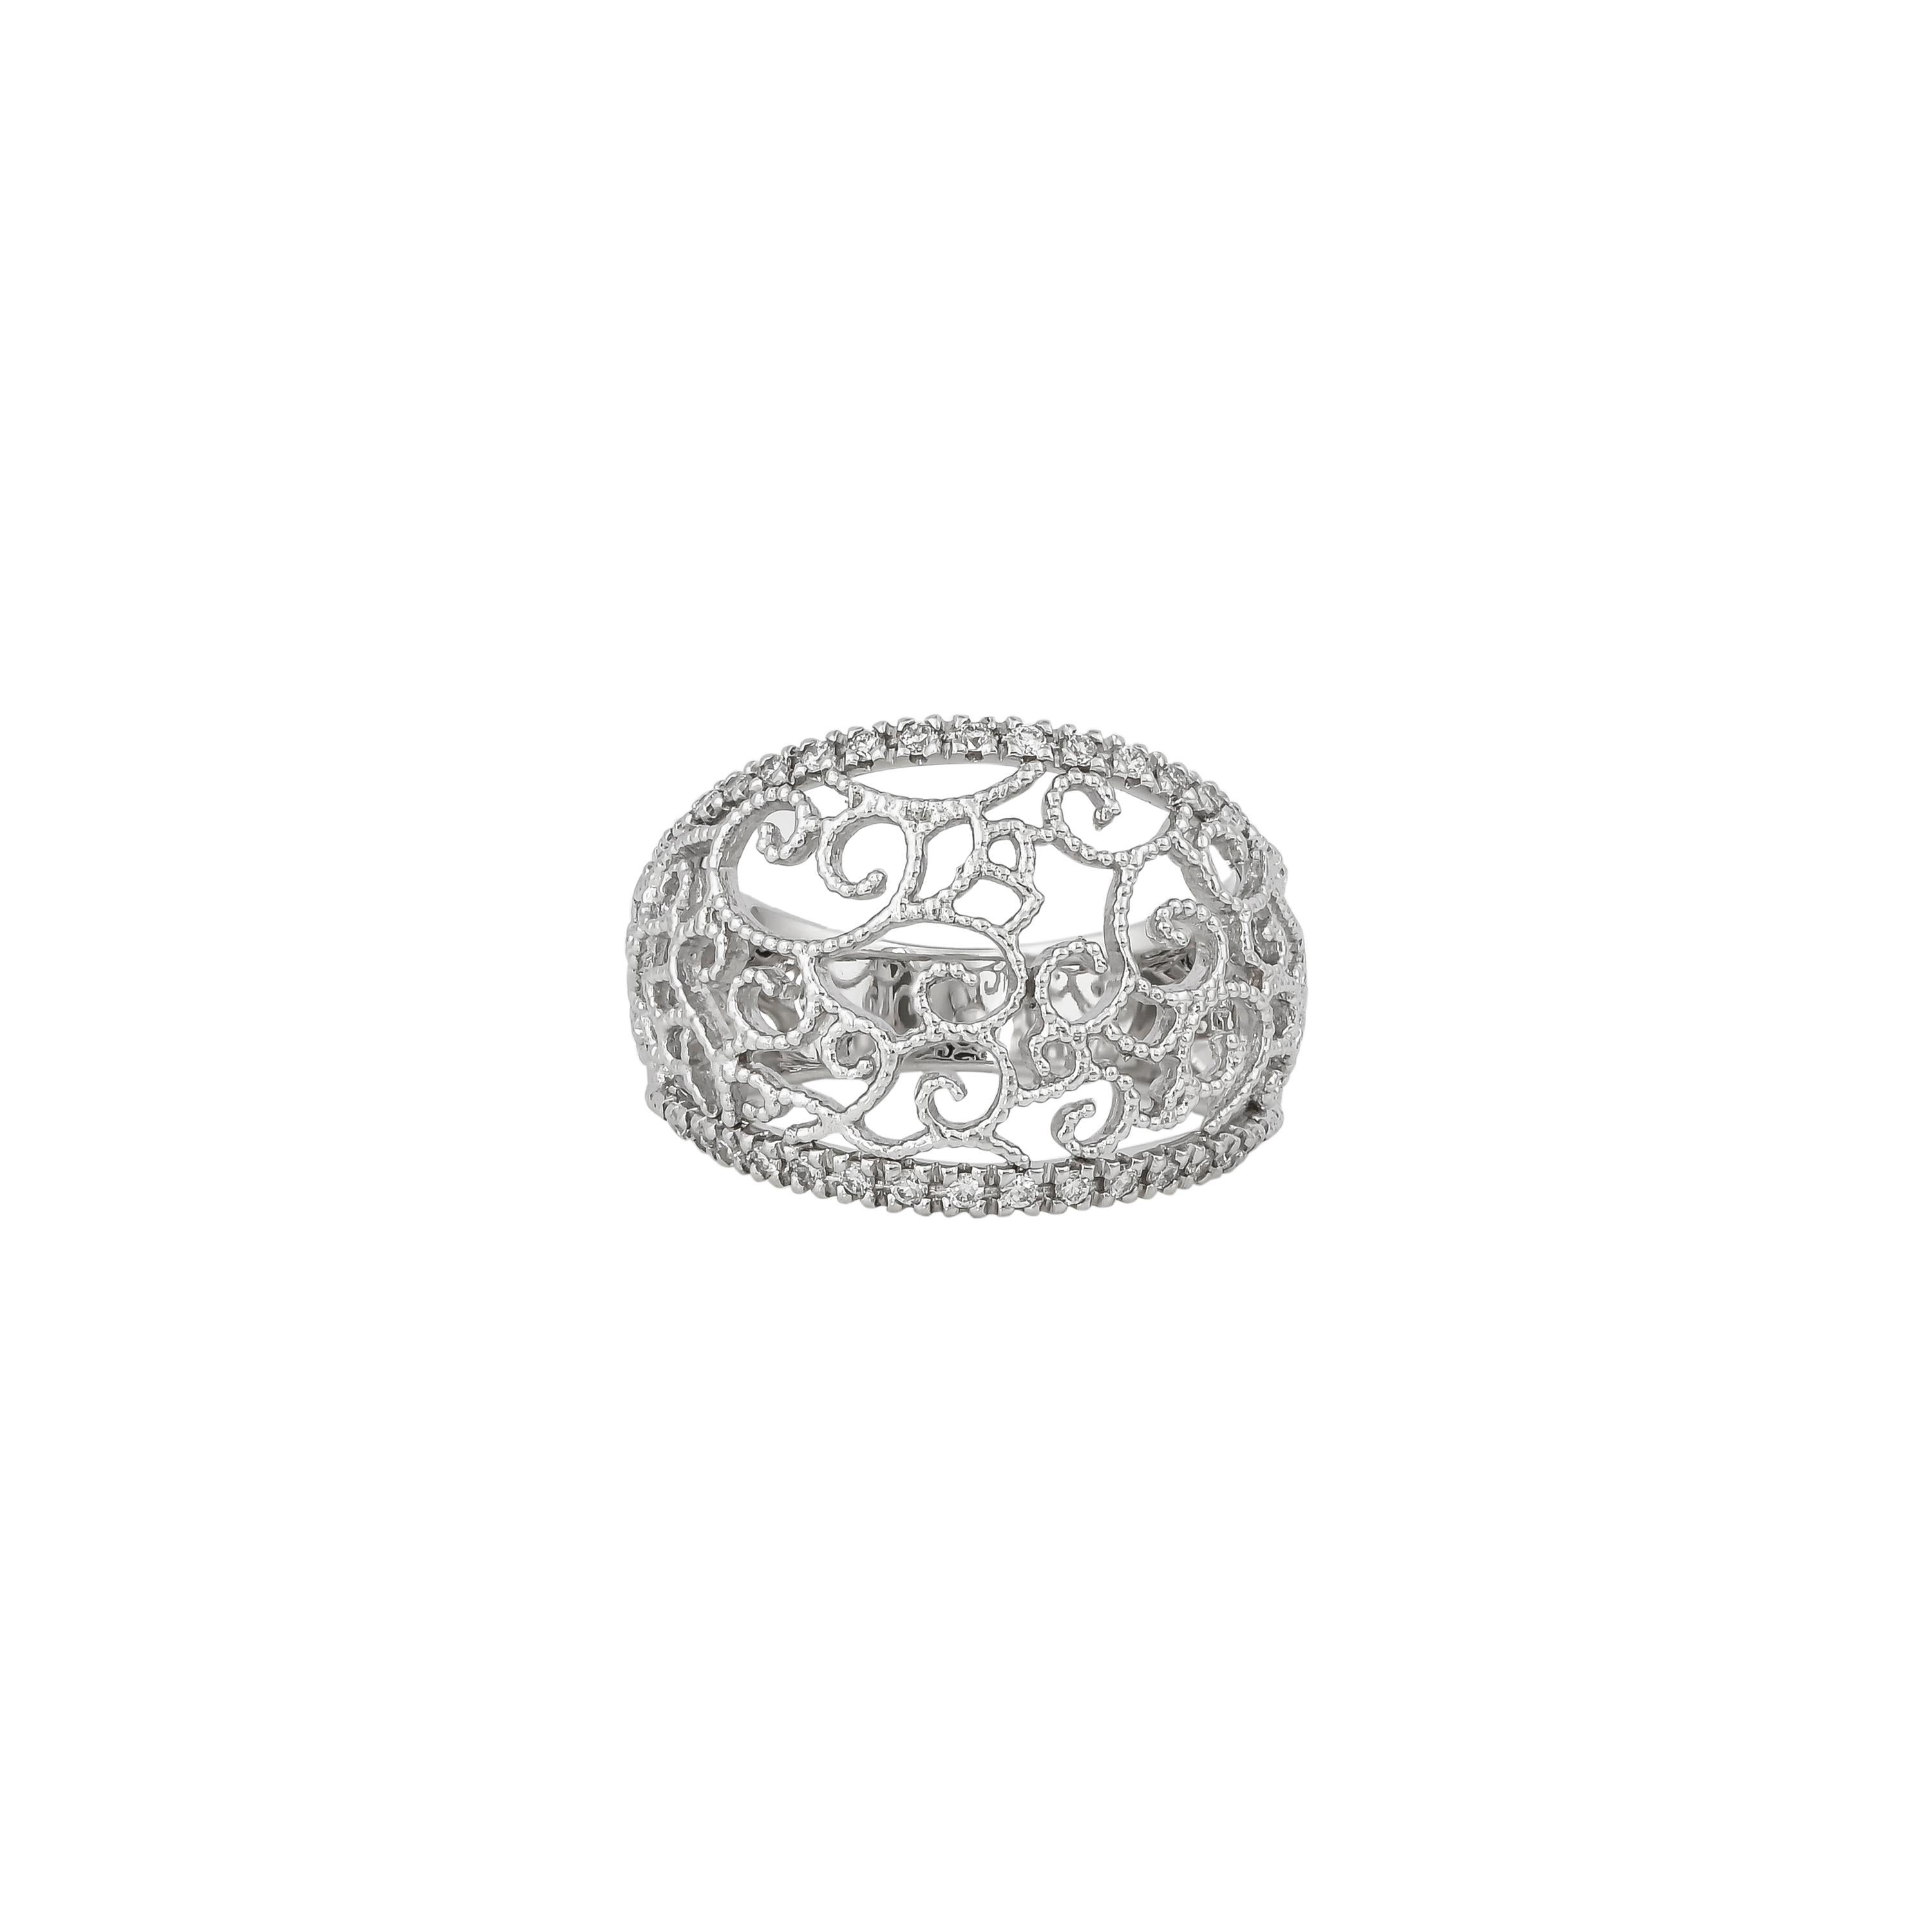 Round Cut 0.304 Carat Diamond Ring in 18 Karat White Gold For Sale